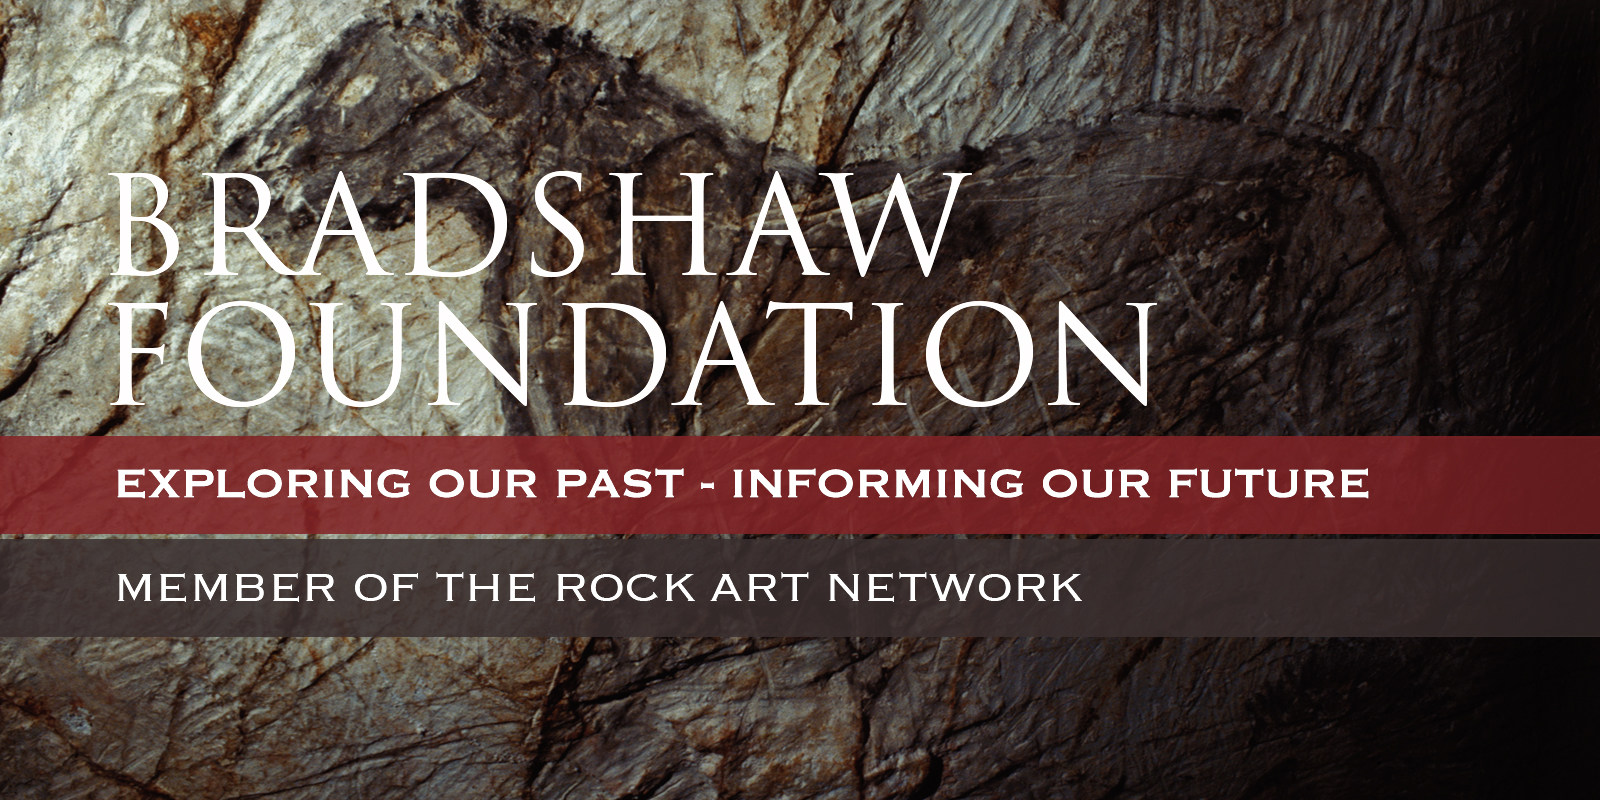 The Rock Art Network